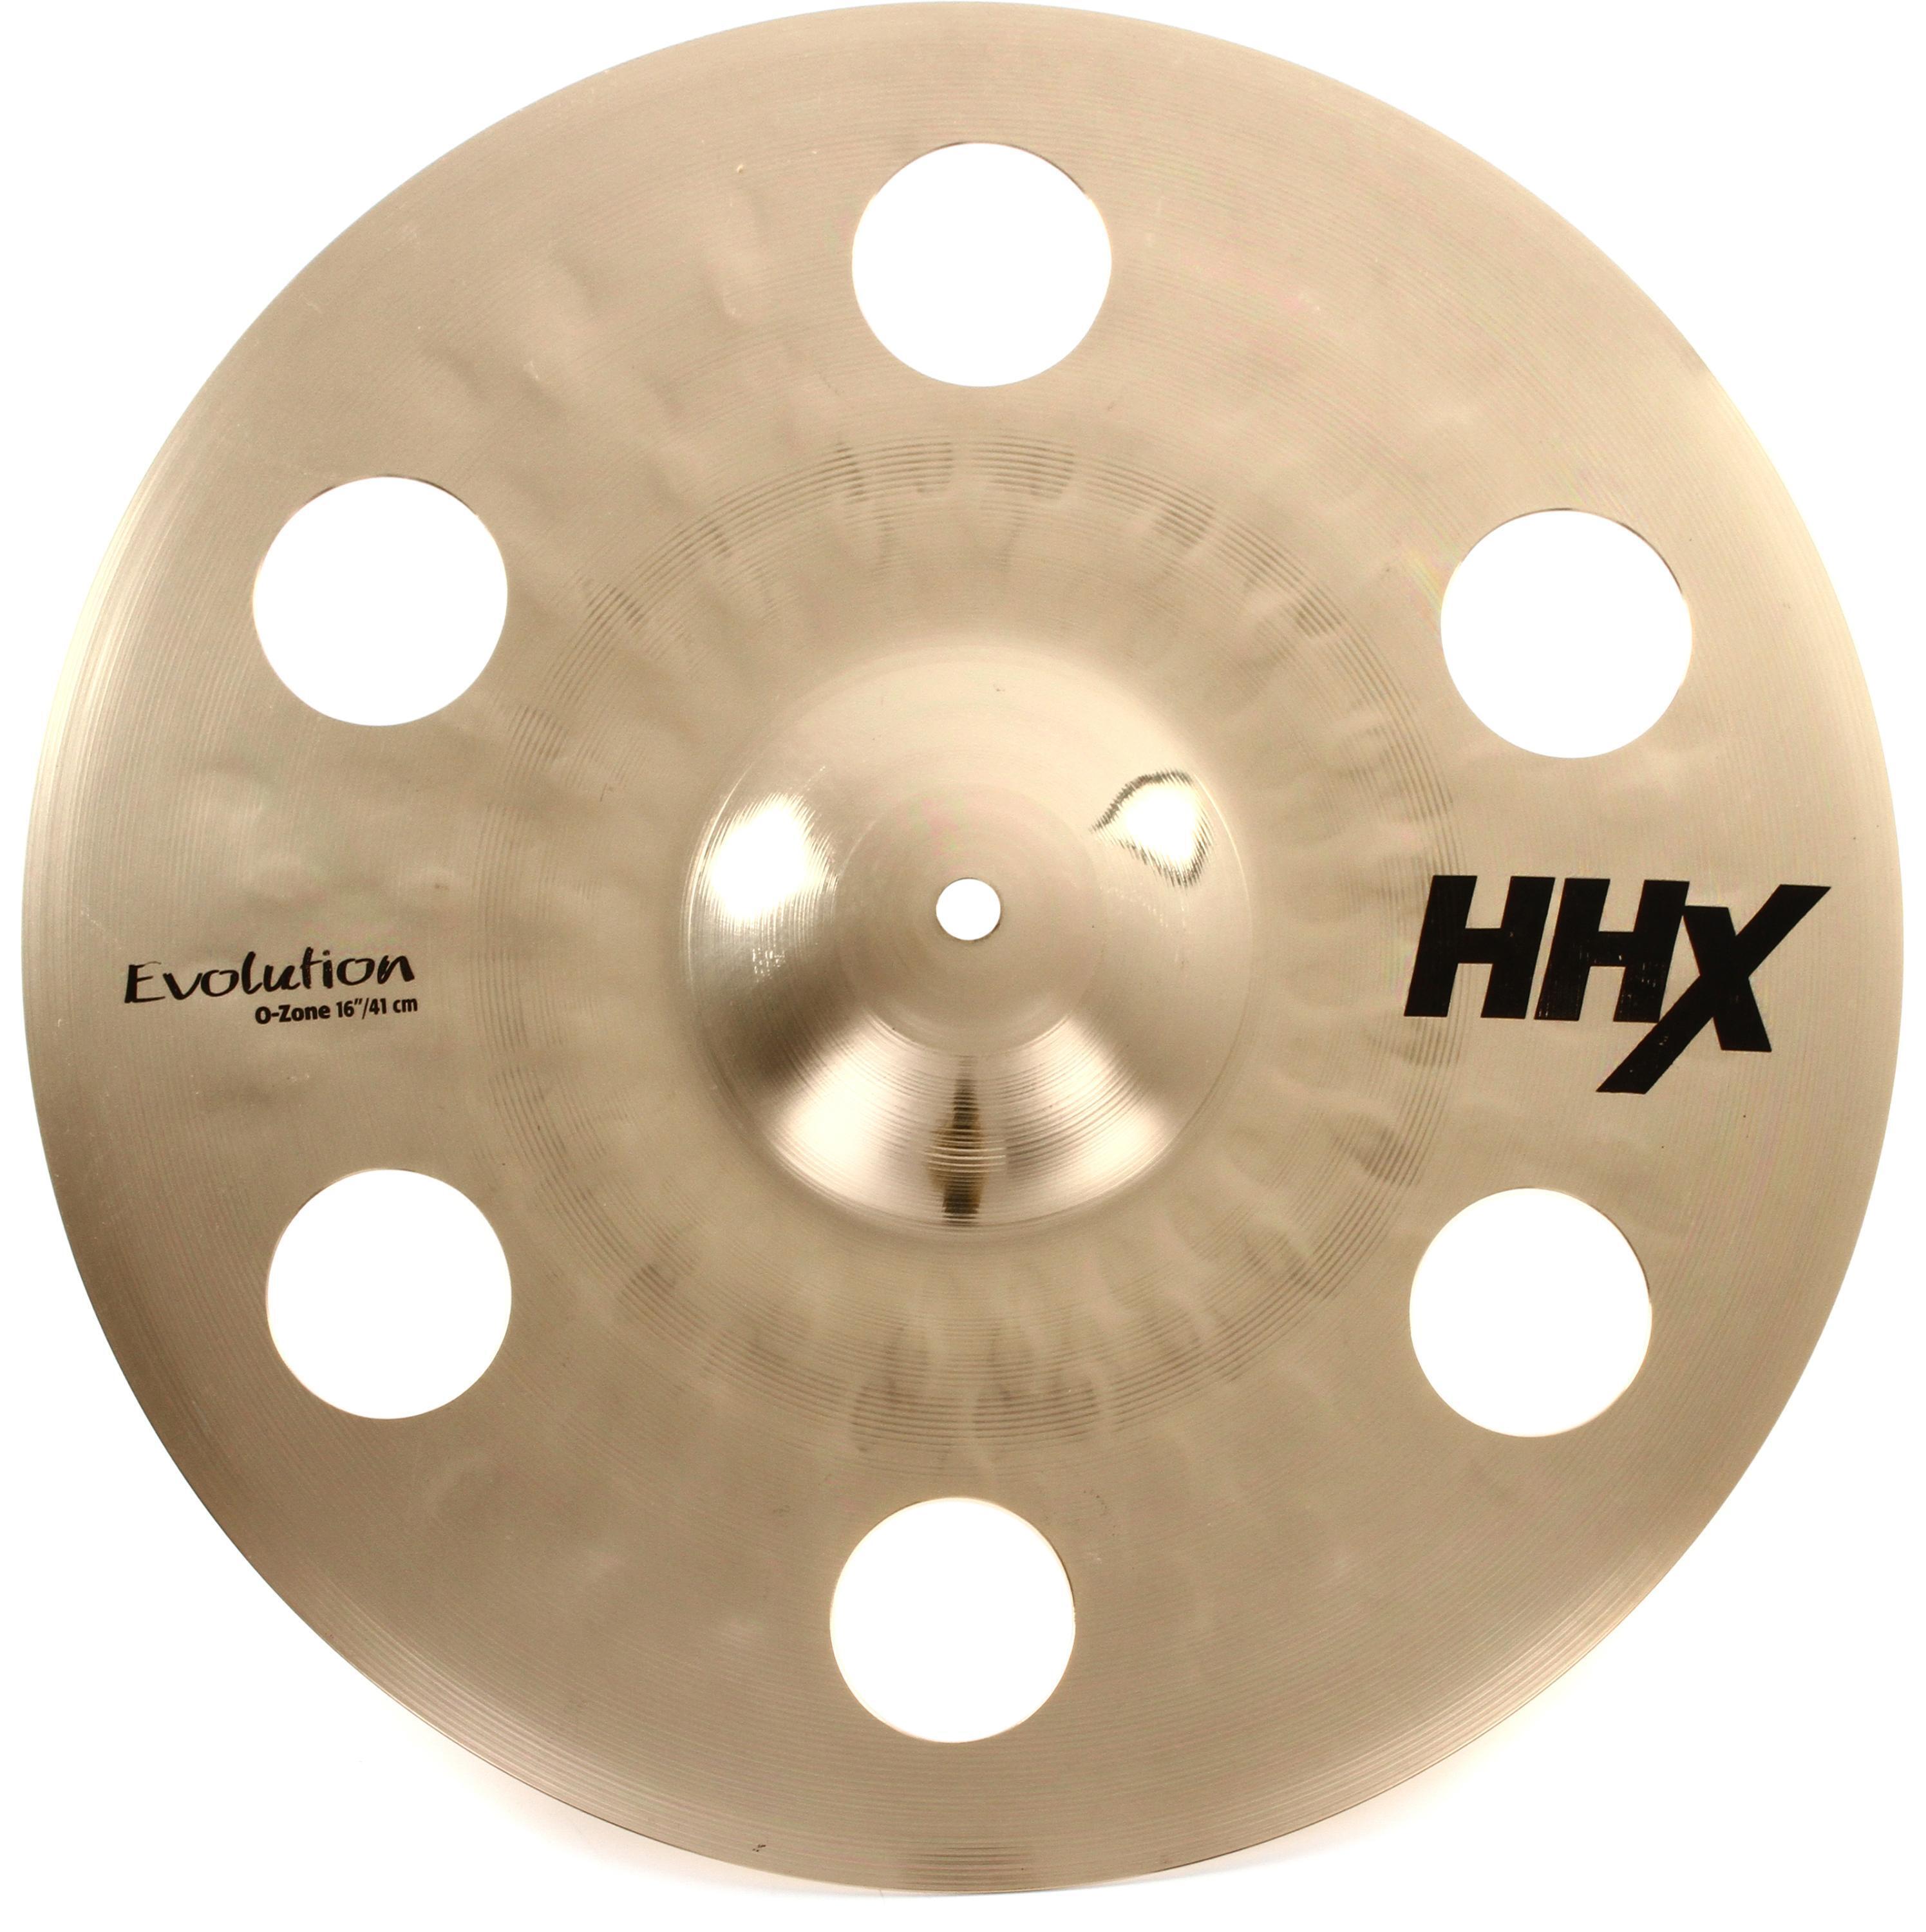 Sabian 16 inch HHX O-Zone Crash Cymbal - Brilliant Finish Reviews